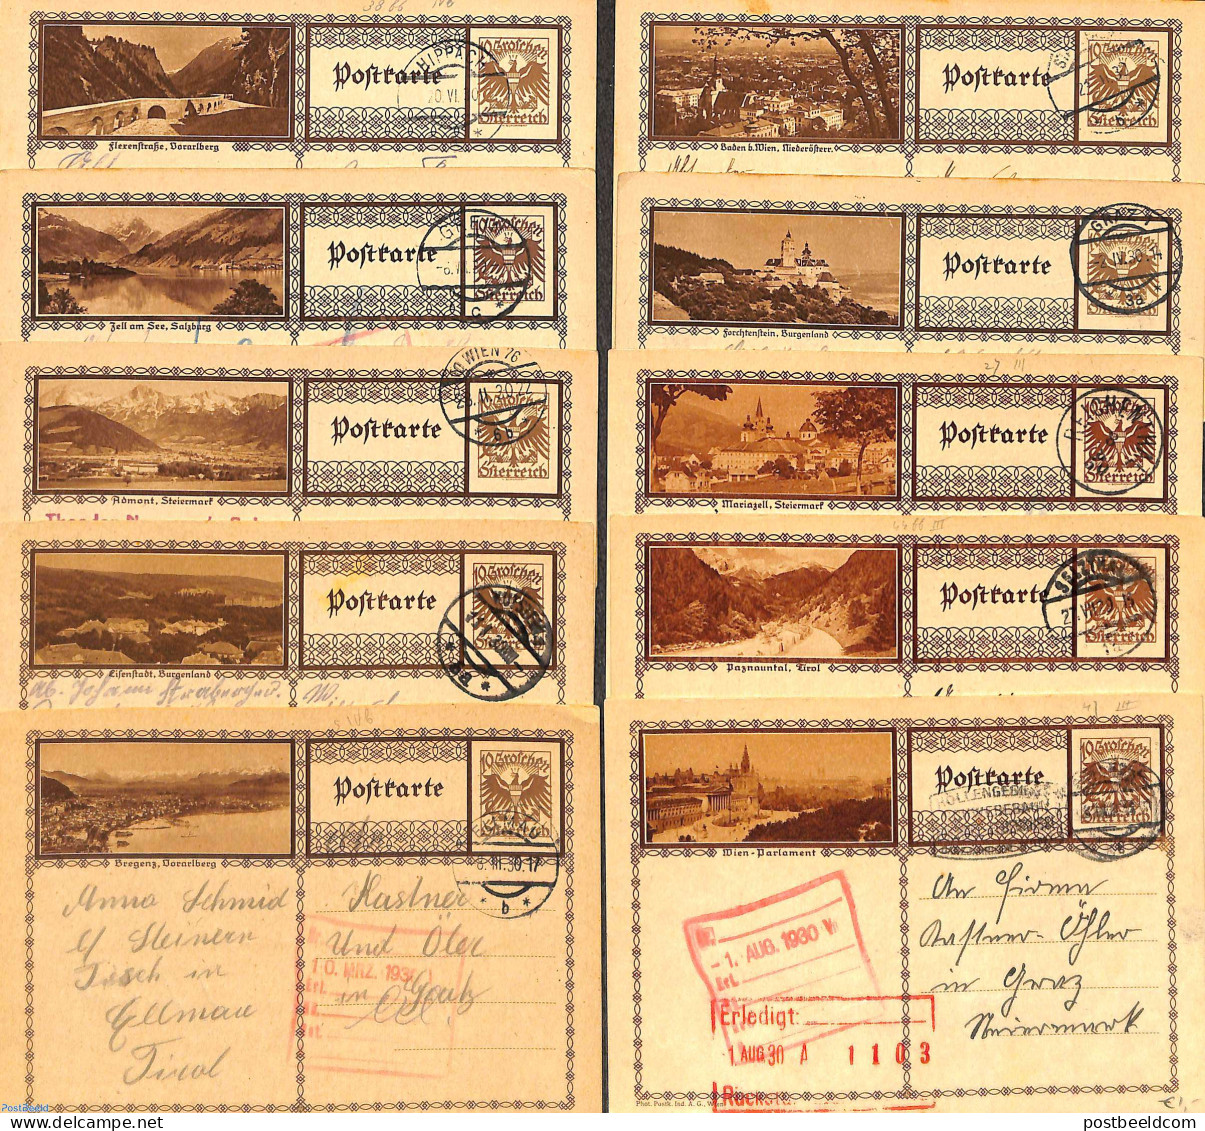 Austria 1930 Lot With 10 Used Illustrated Postcards, Used Postal Stationary - Briefe U. Dokumente